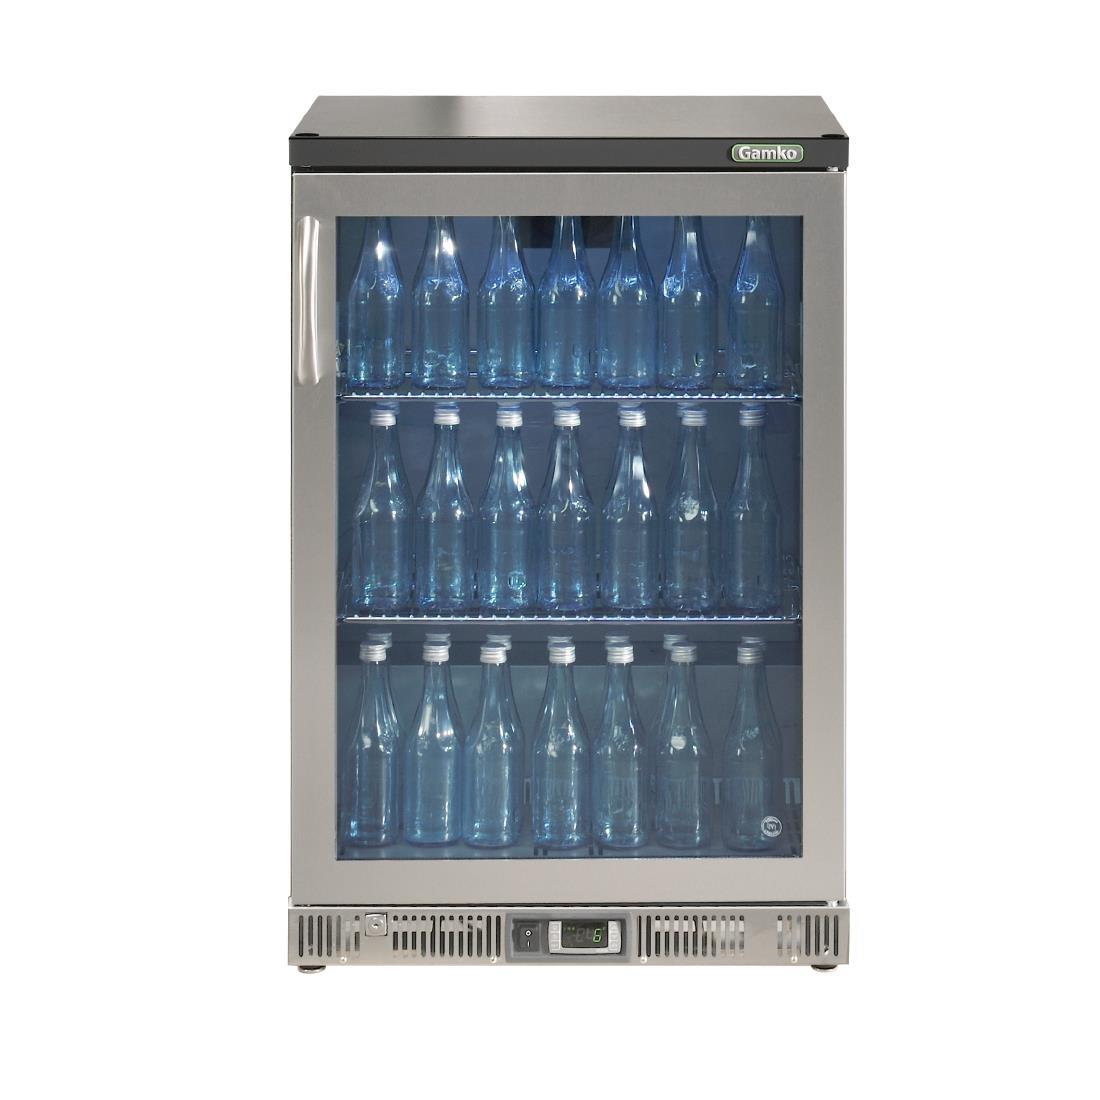 Gamko Bottle Cooler - Single Hinged Door 150 Ltr Stainless Steel - CE558  - 2